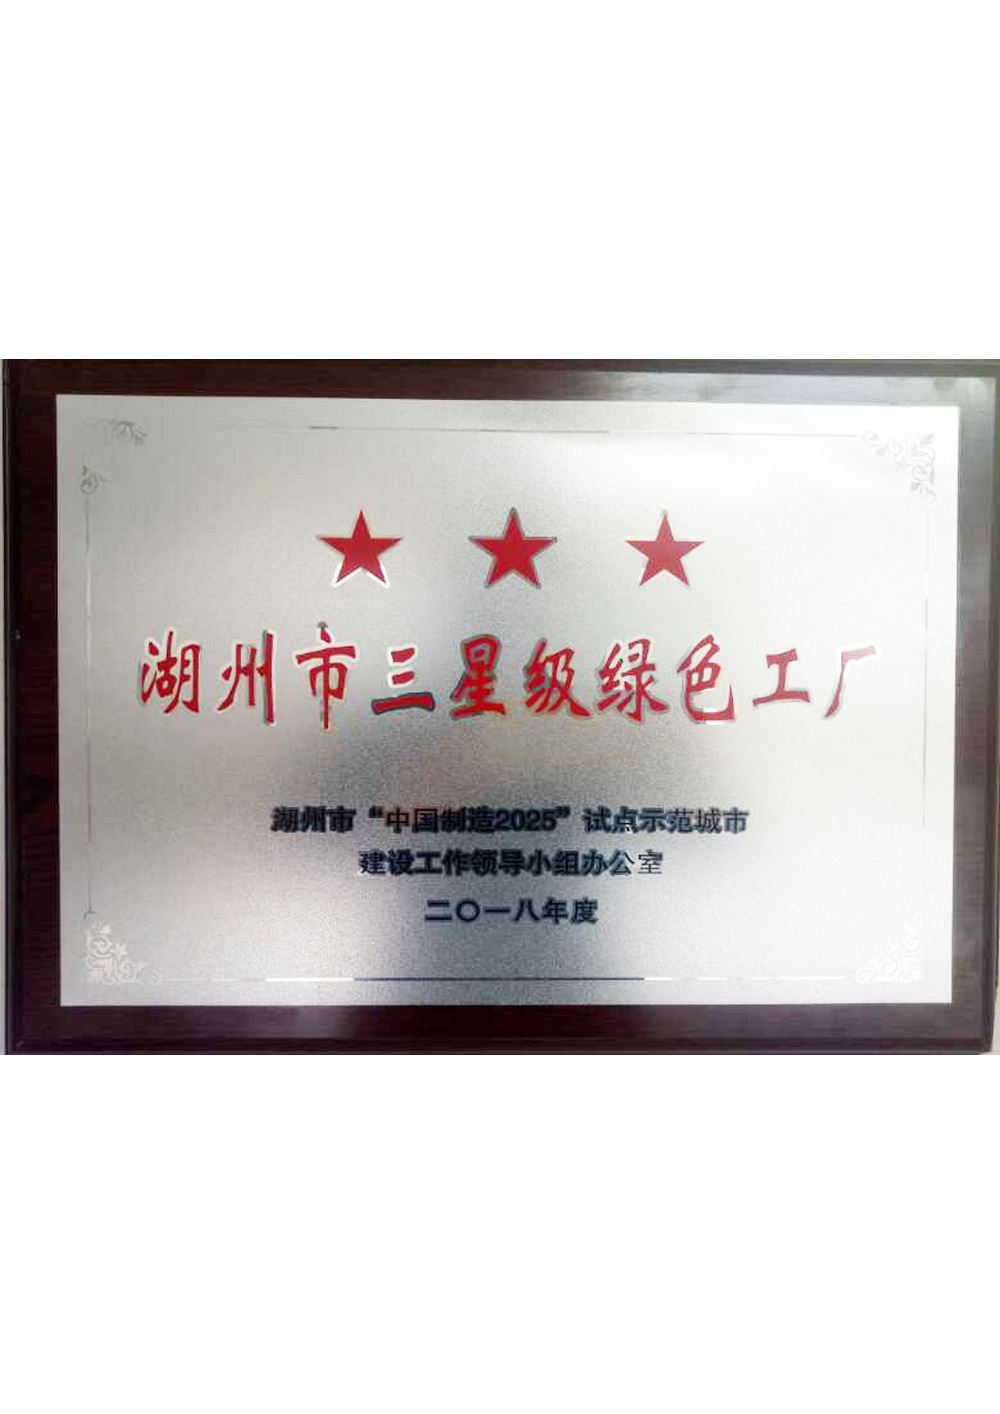 Huzhou three-star green factory in 2018